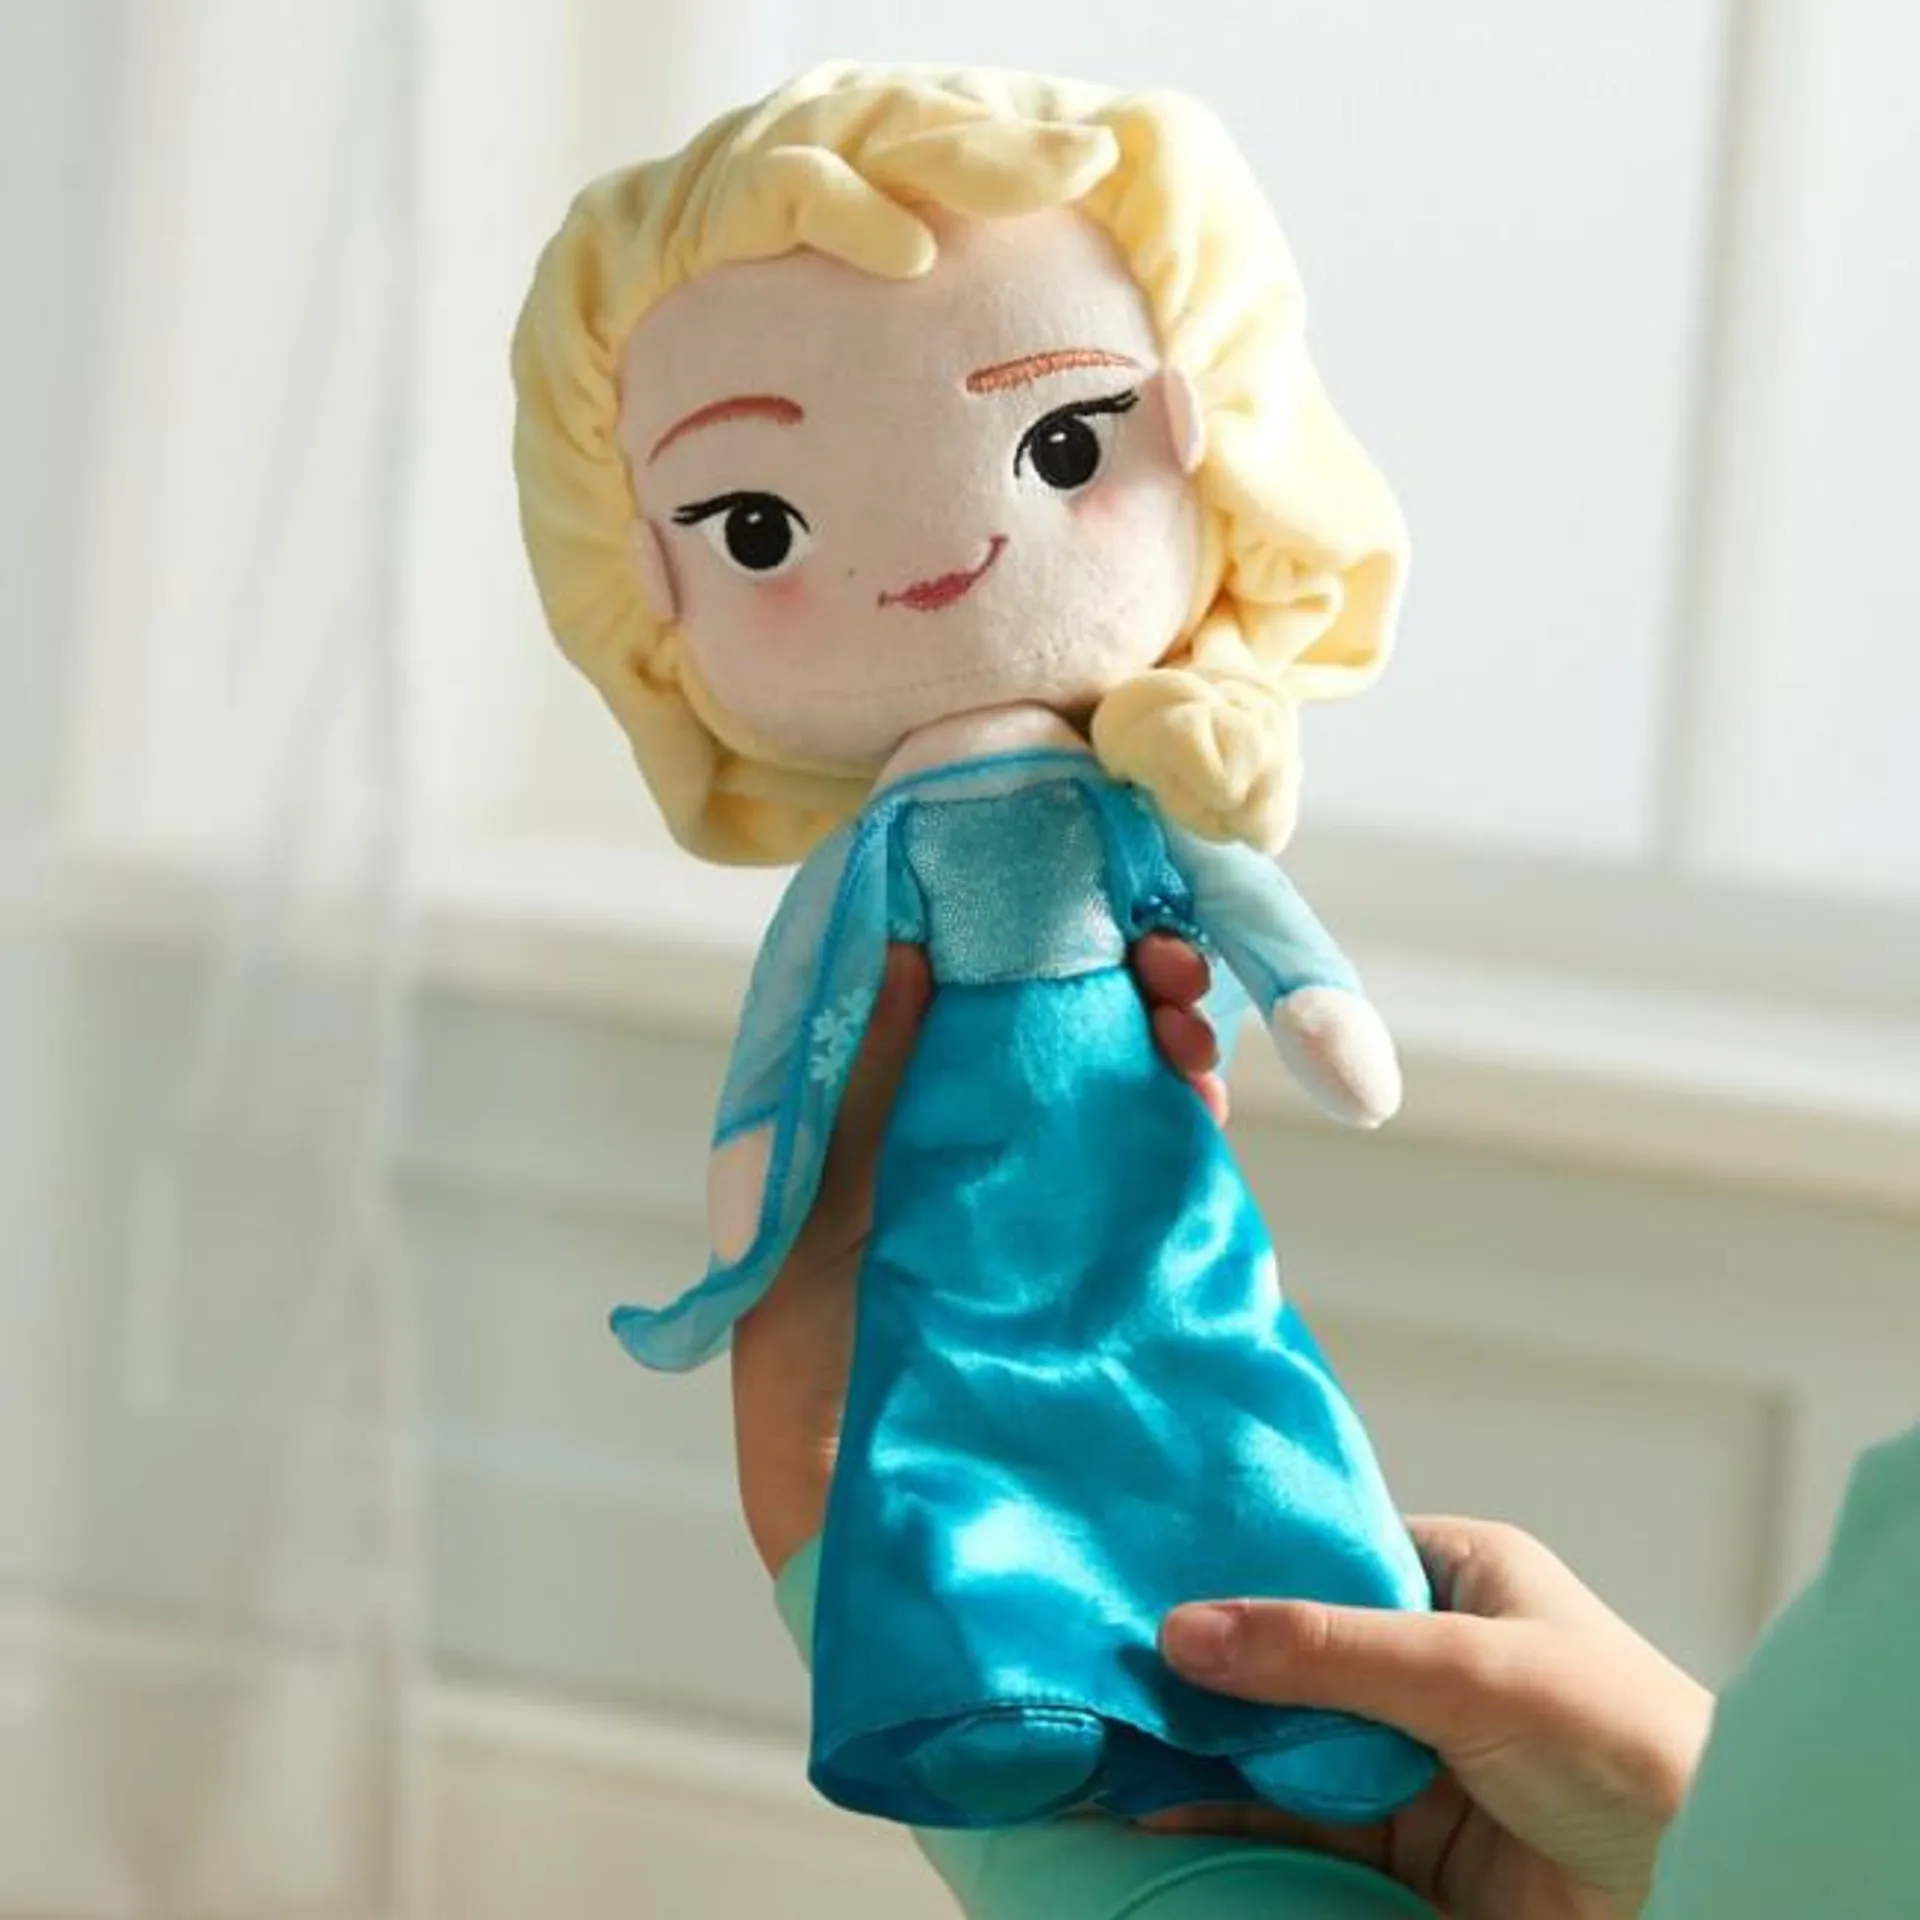 Disney Store Elsa Soft Toy Doll, Frozen